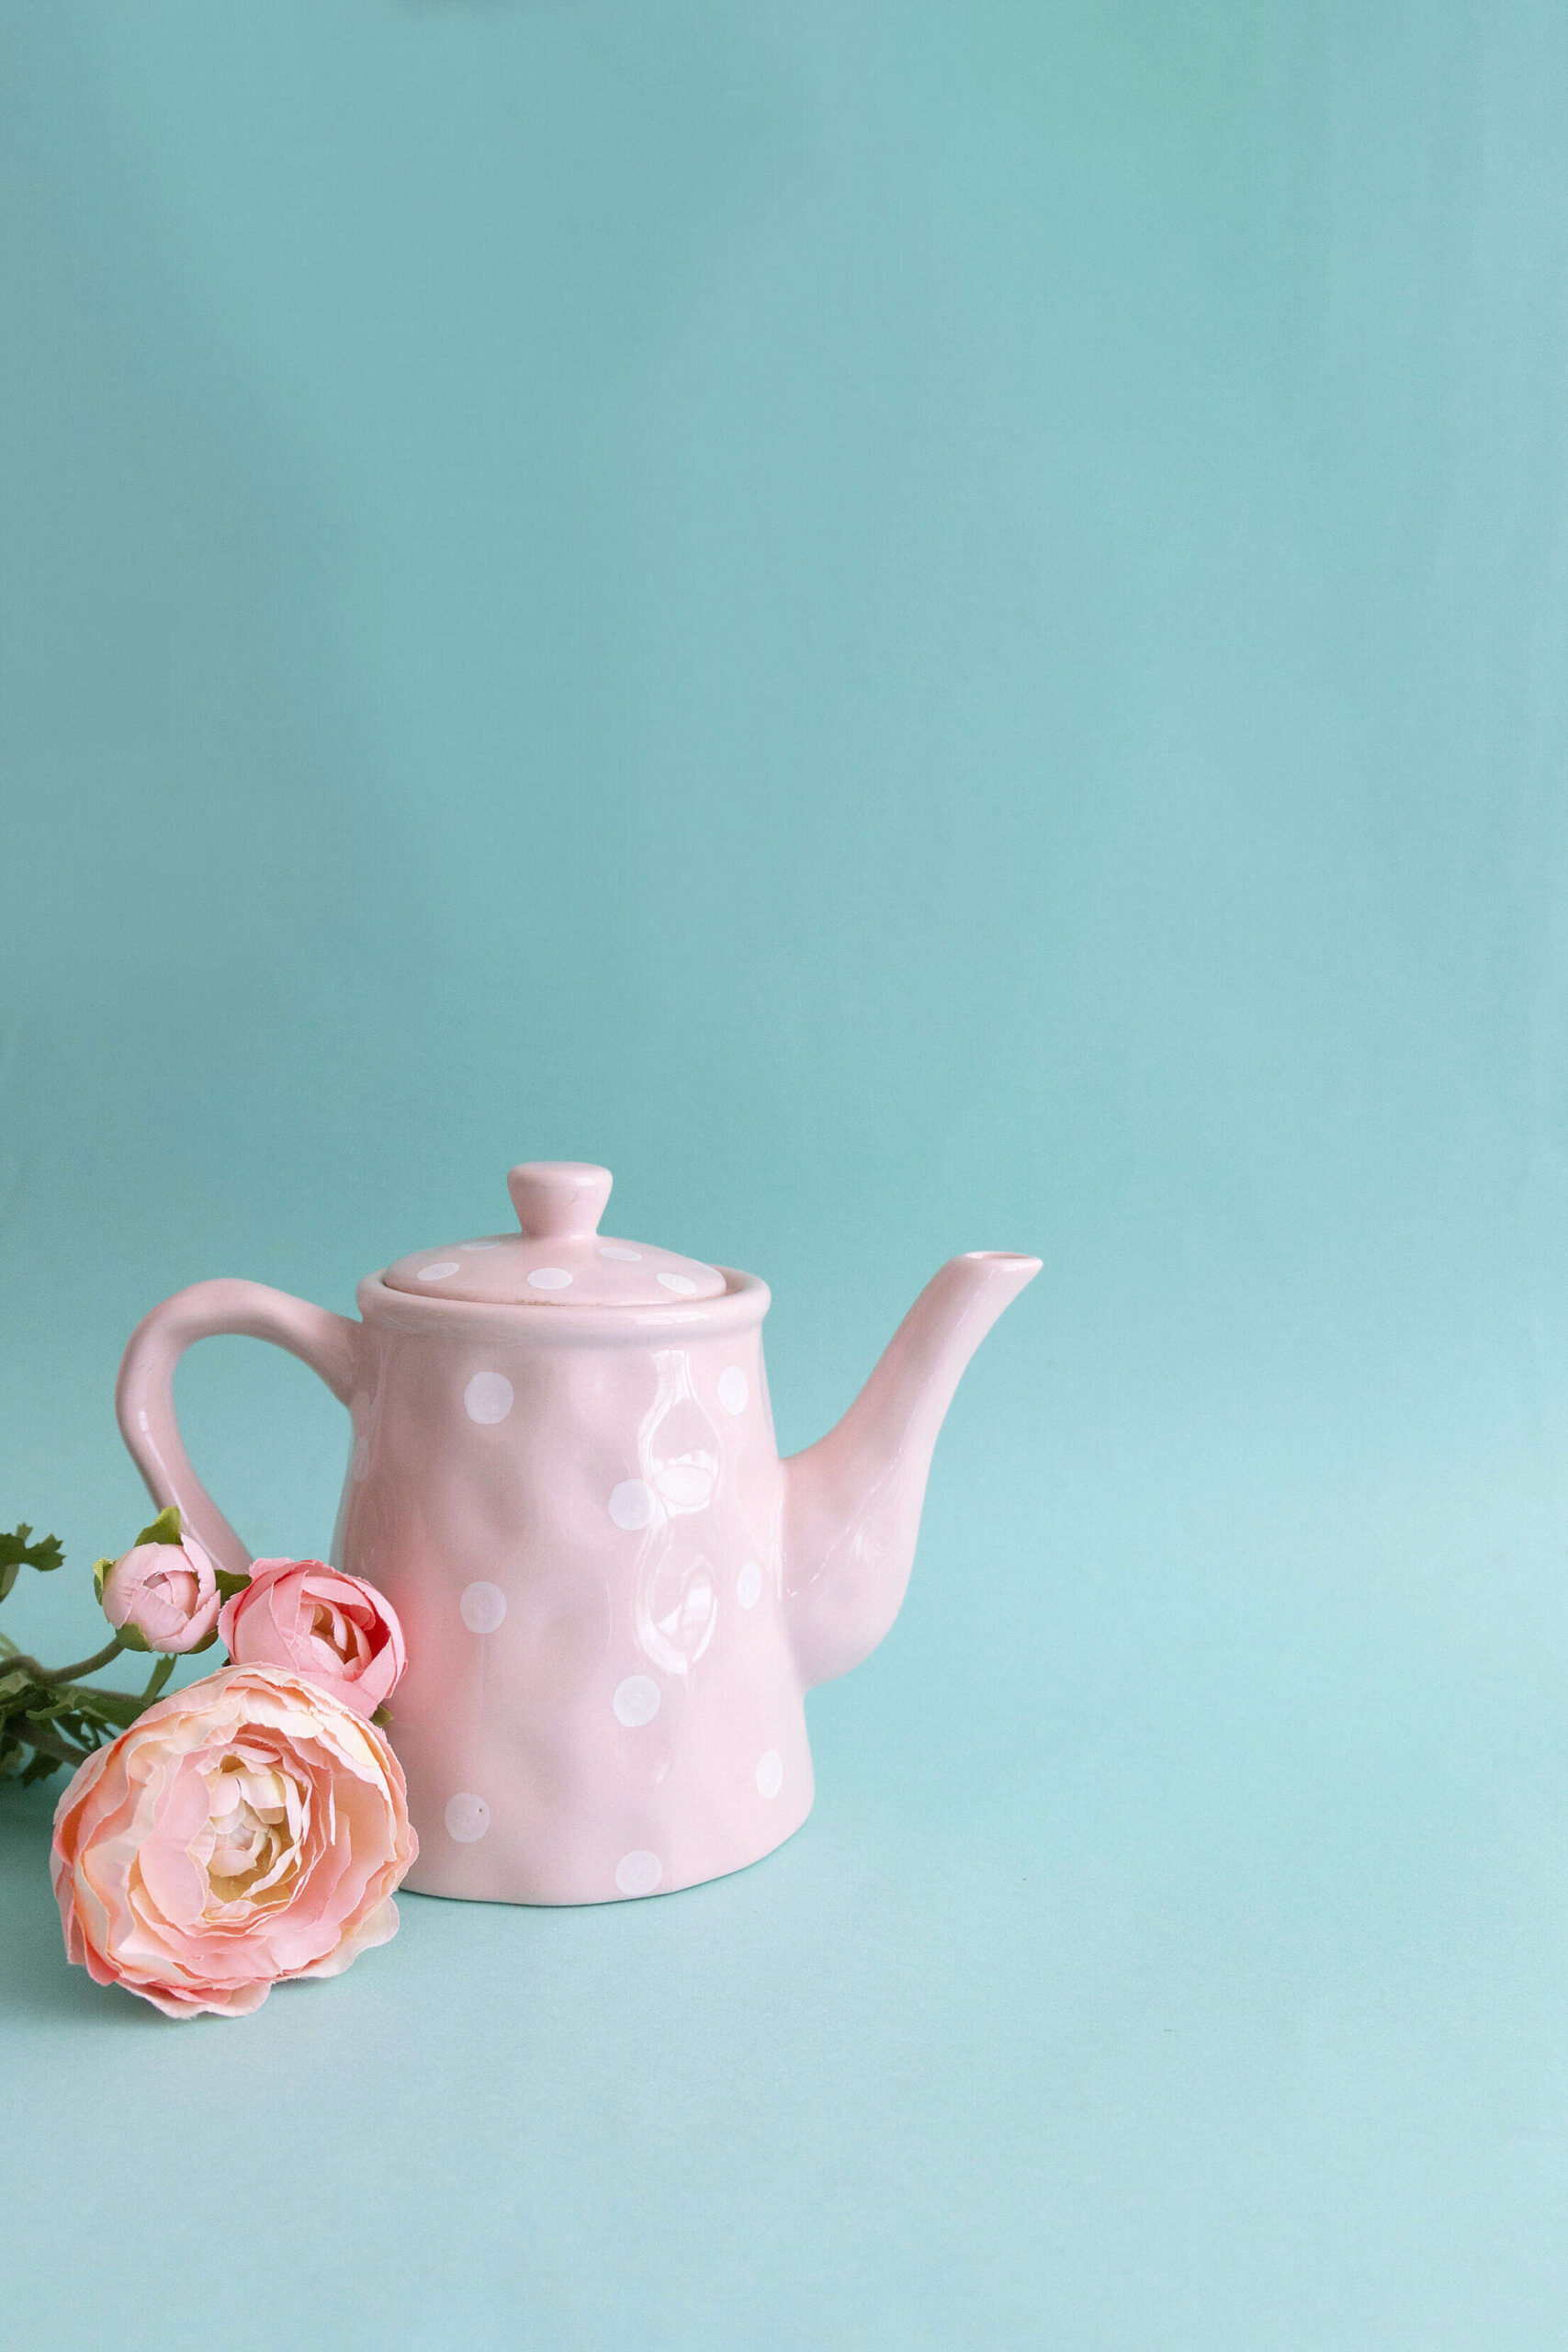 colorful-vintage-teapot-tea-time-free-photo-2210x3315